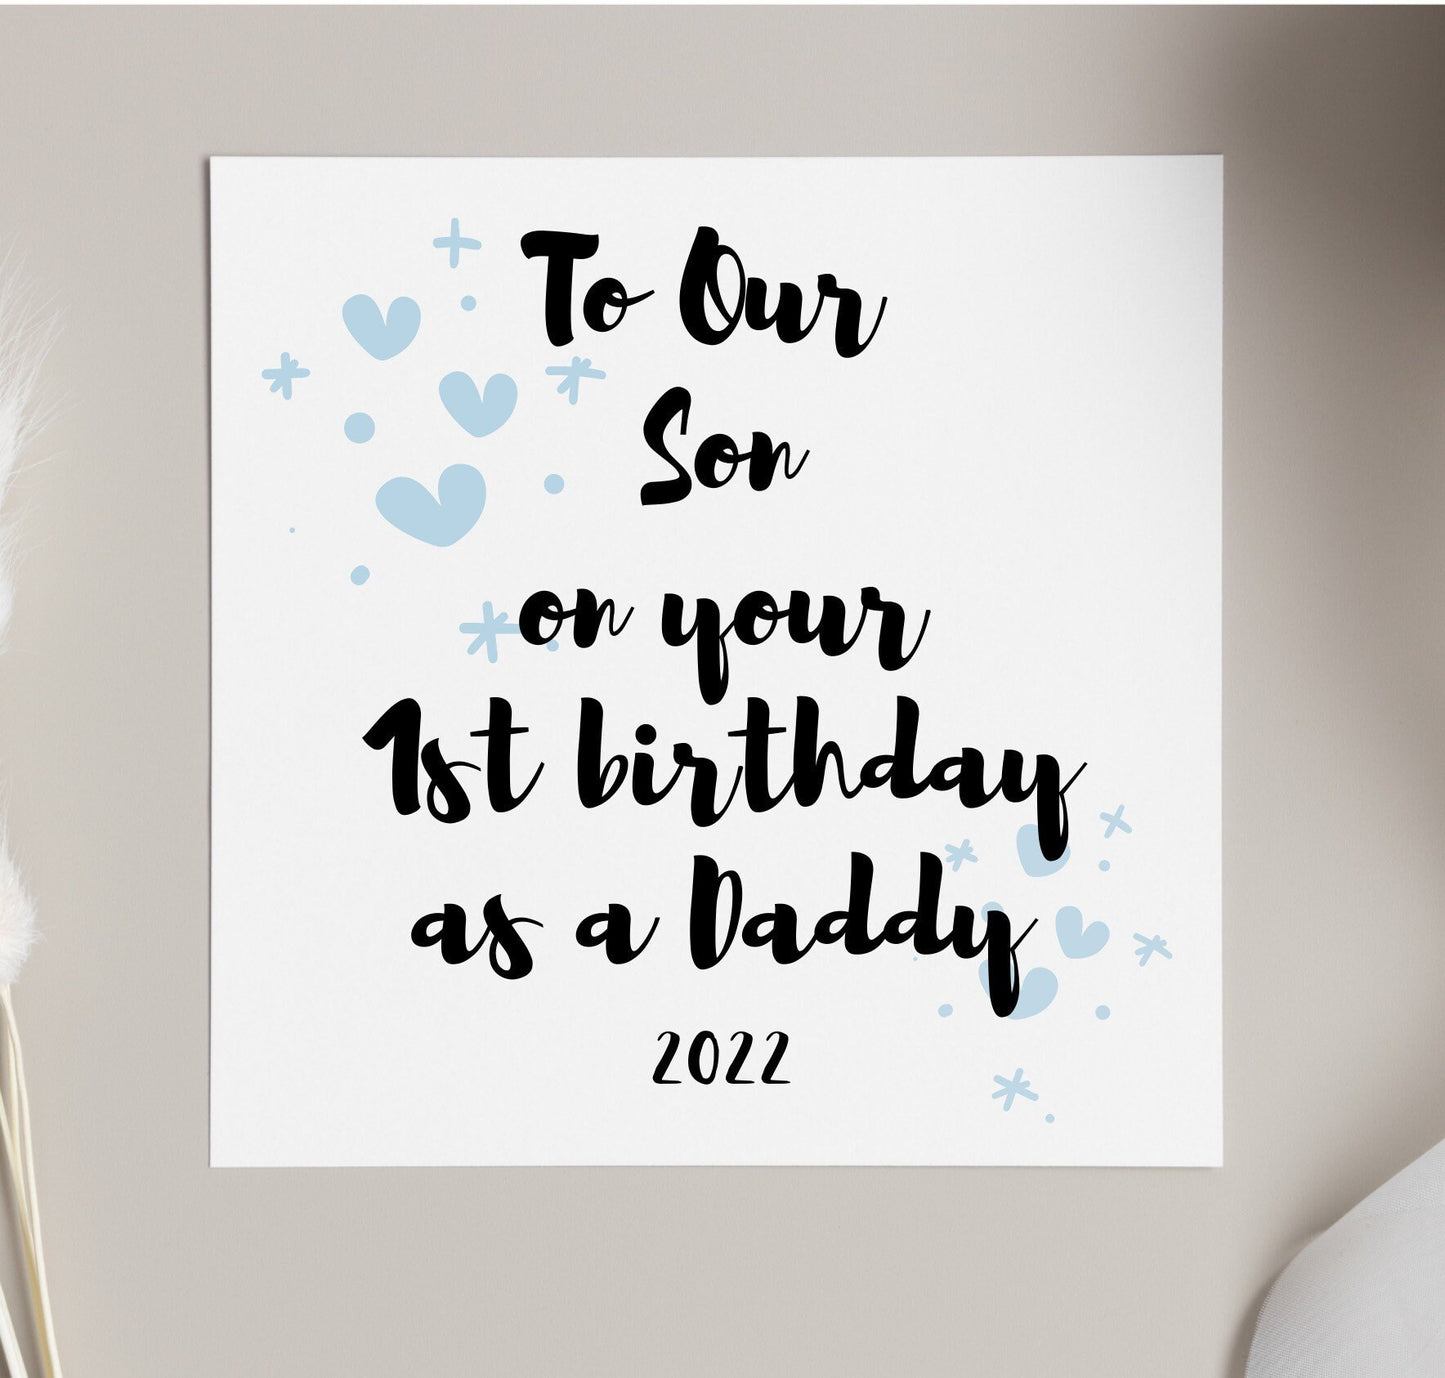 Son first birthday as a daddy card, dad 1st birthday card, new parent card, son bday card, new grandchild card